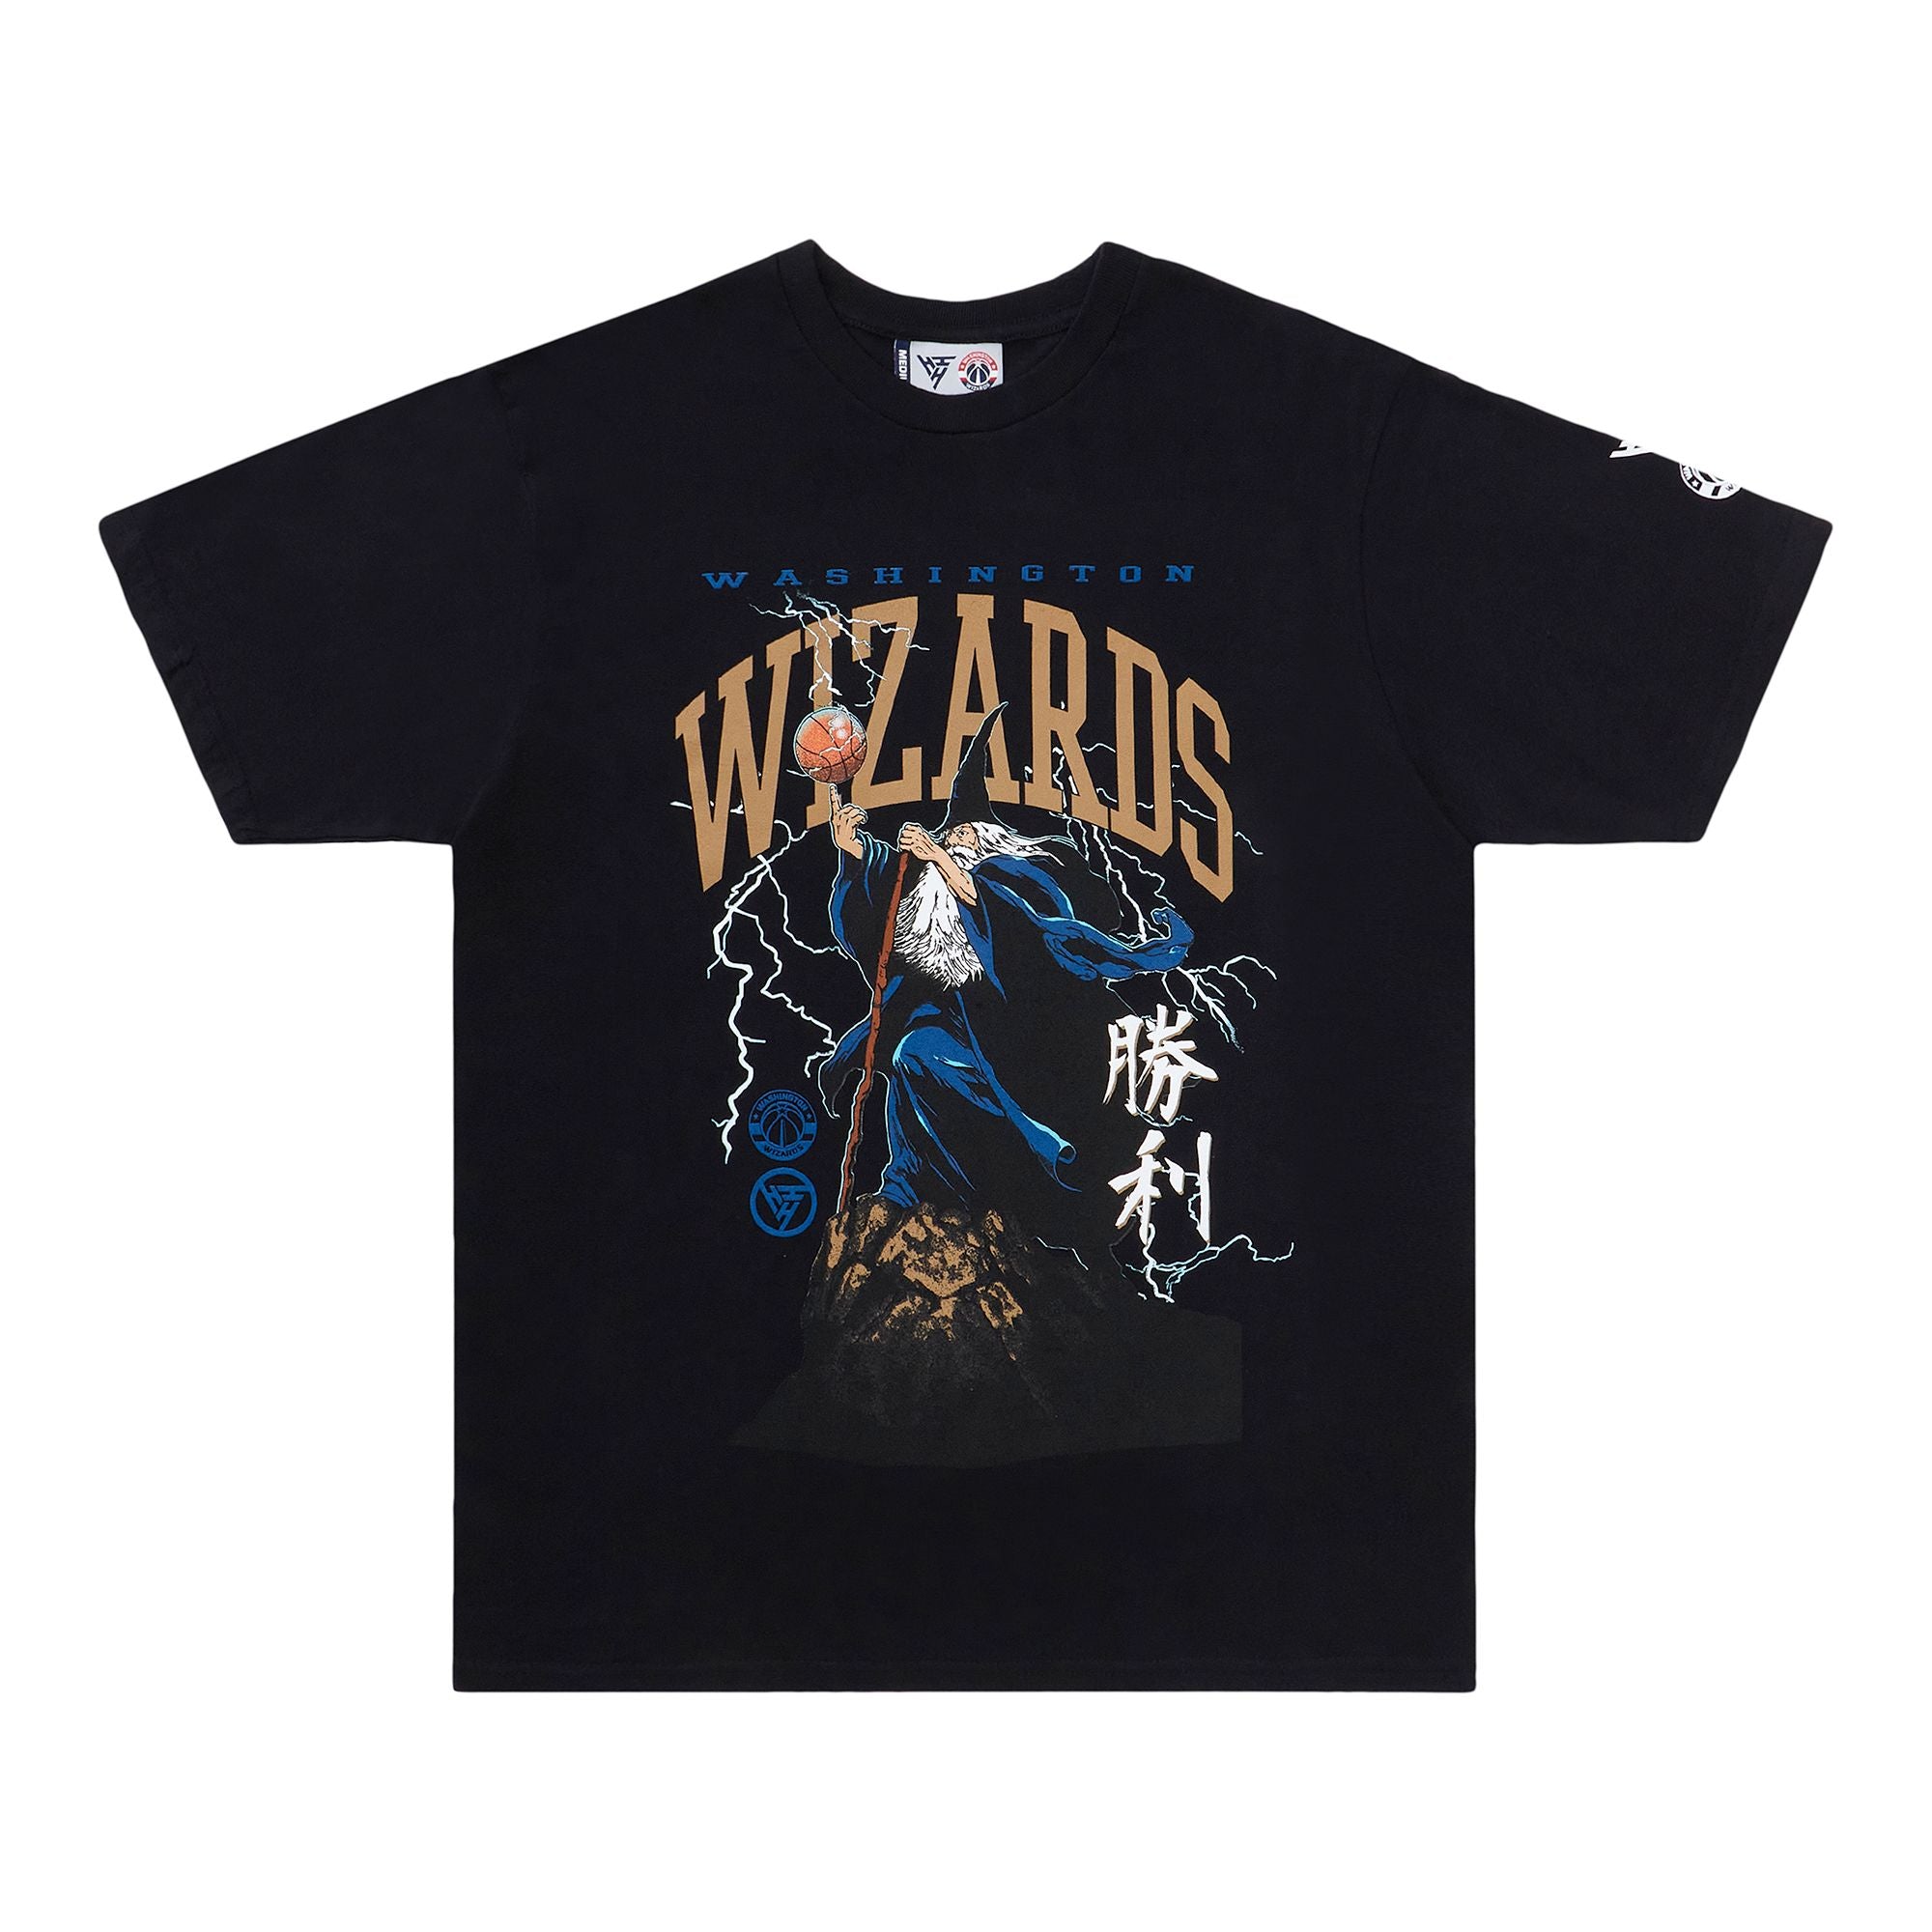 Washington Wizards Store, Wizards Jerseys, Apparel, Merchandise